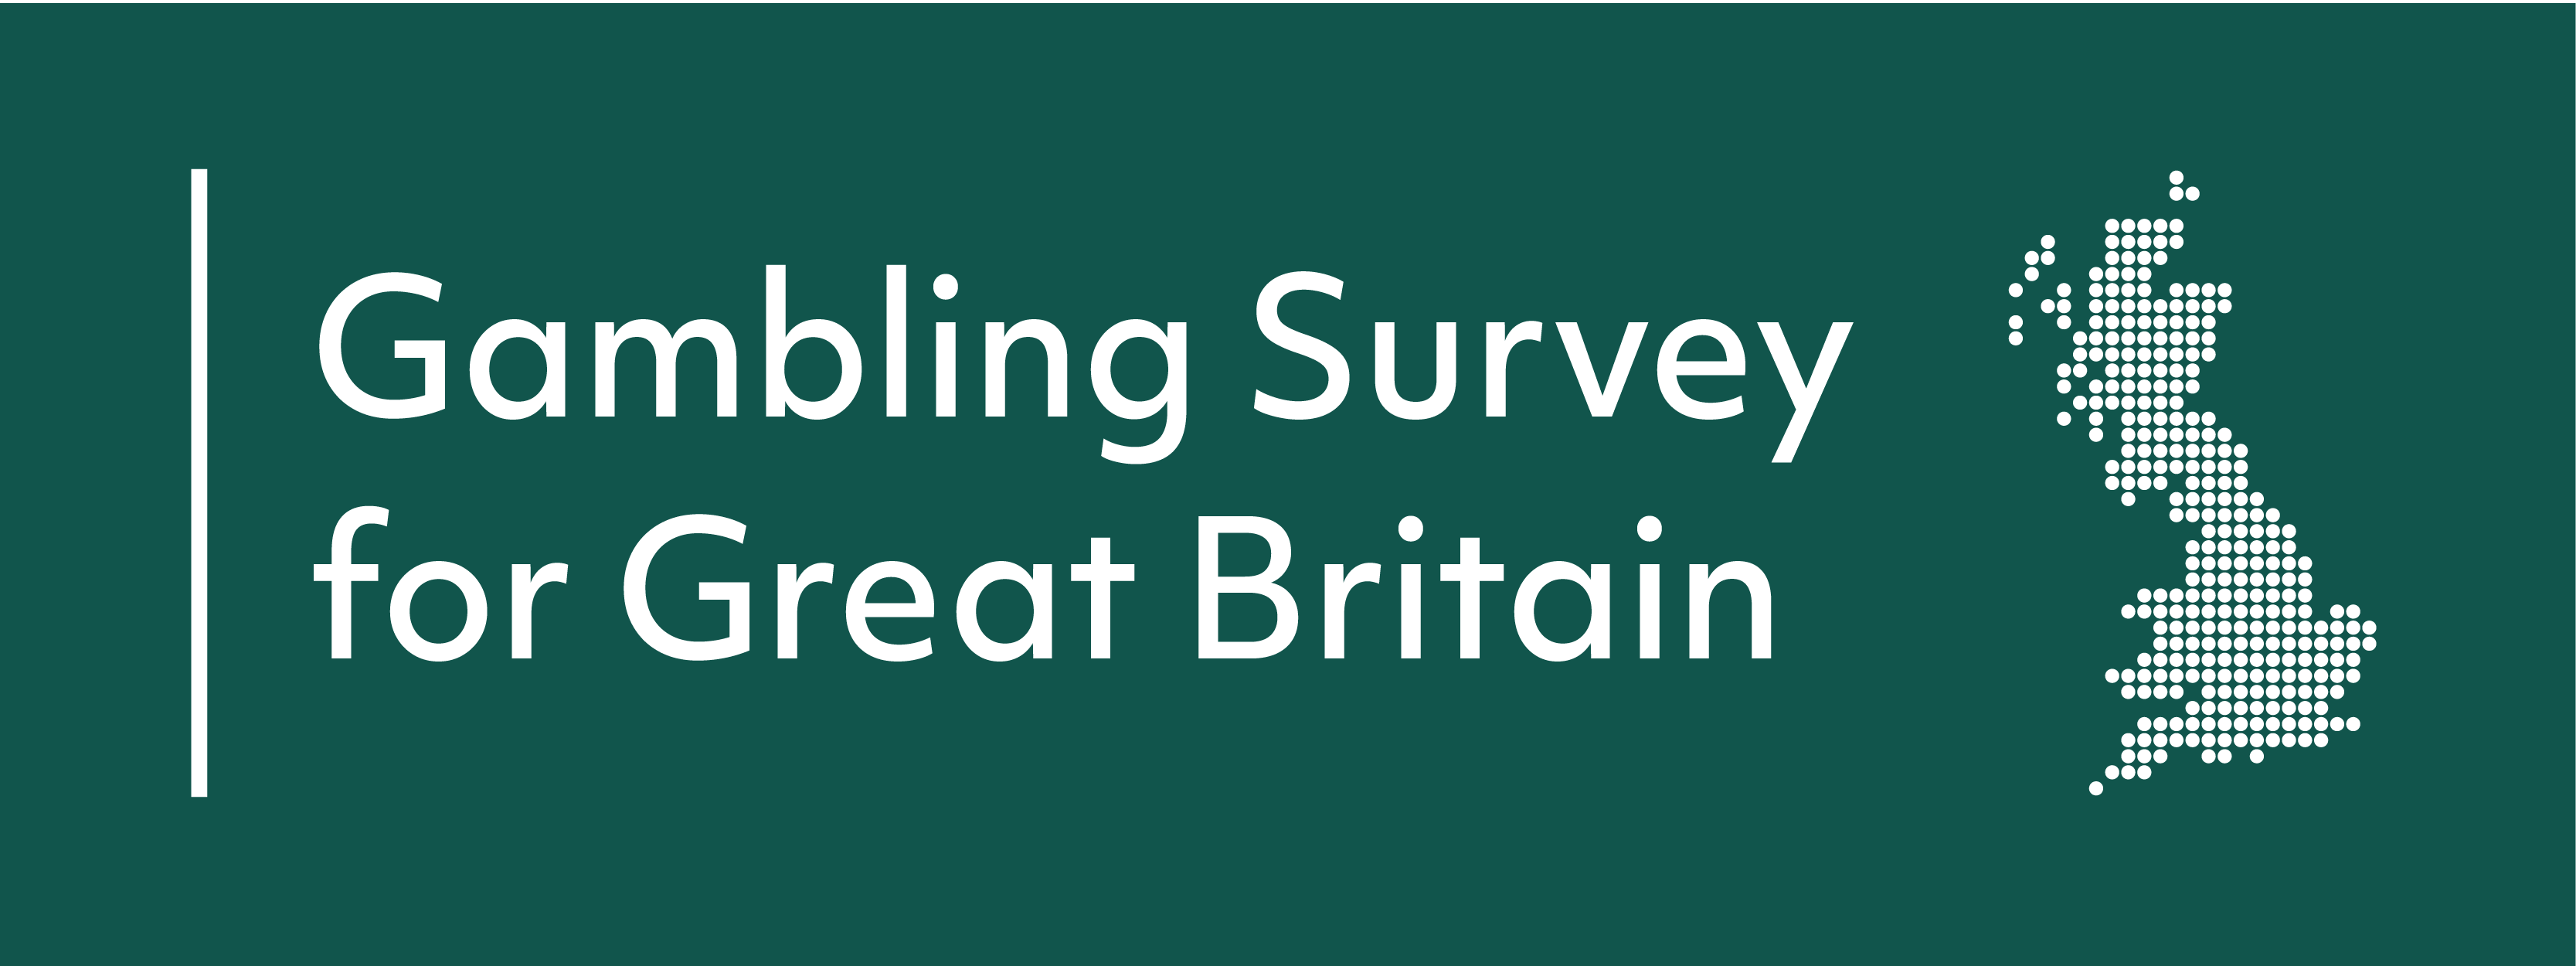 Gambling Survey for Great Britain (GSGB) logo